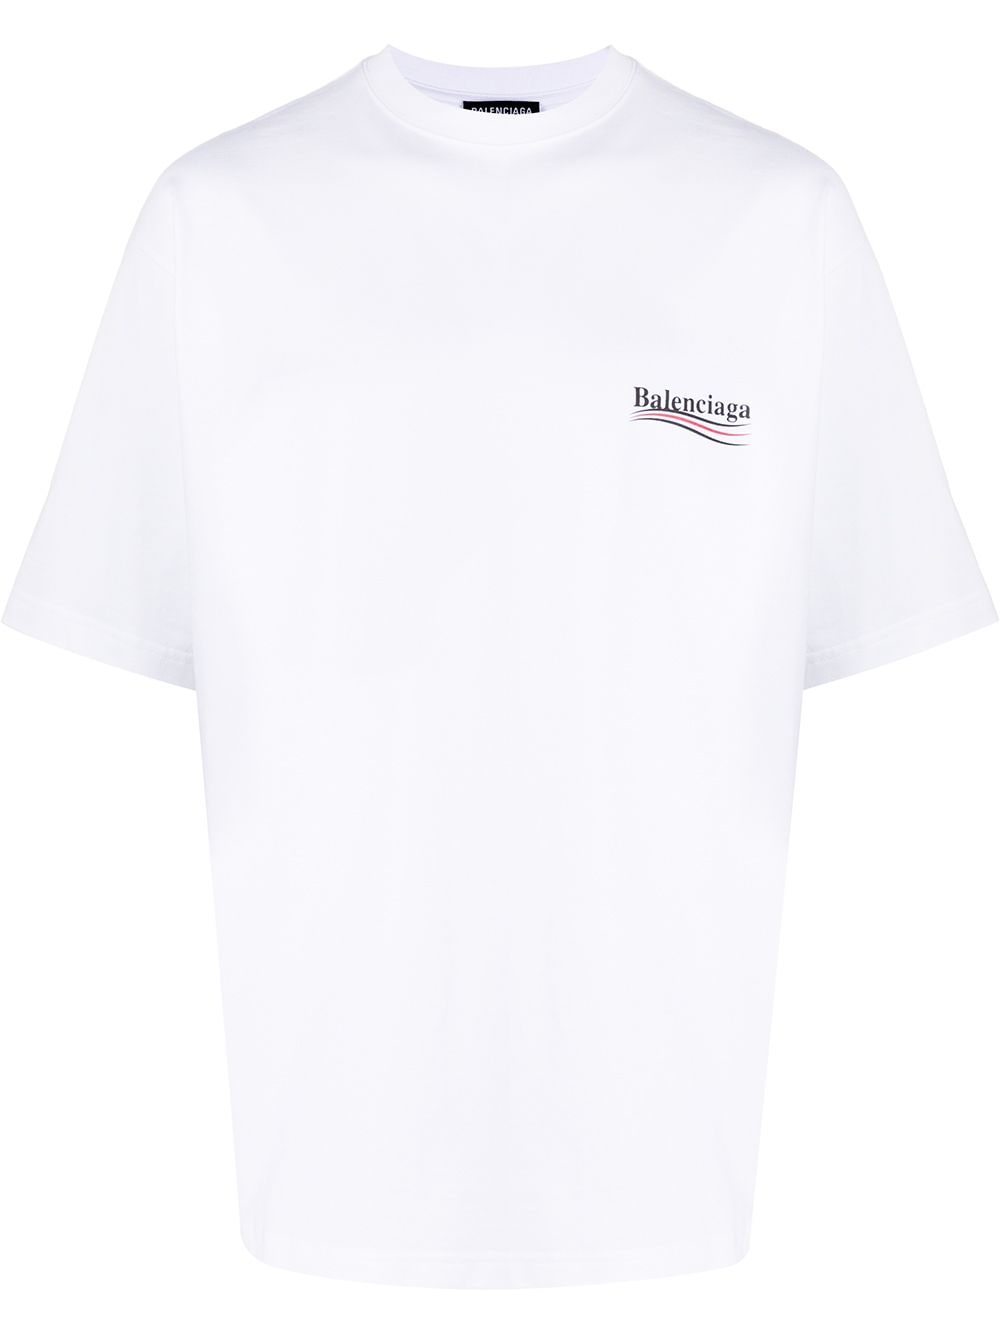 Balenciaga printed logo oversized T-shirt - White